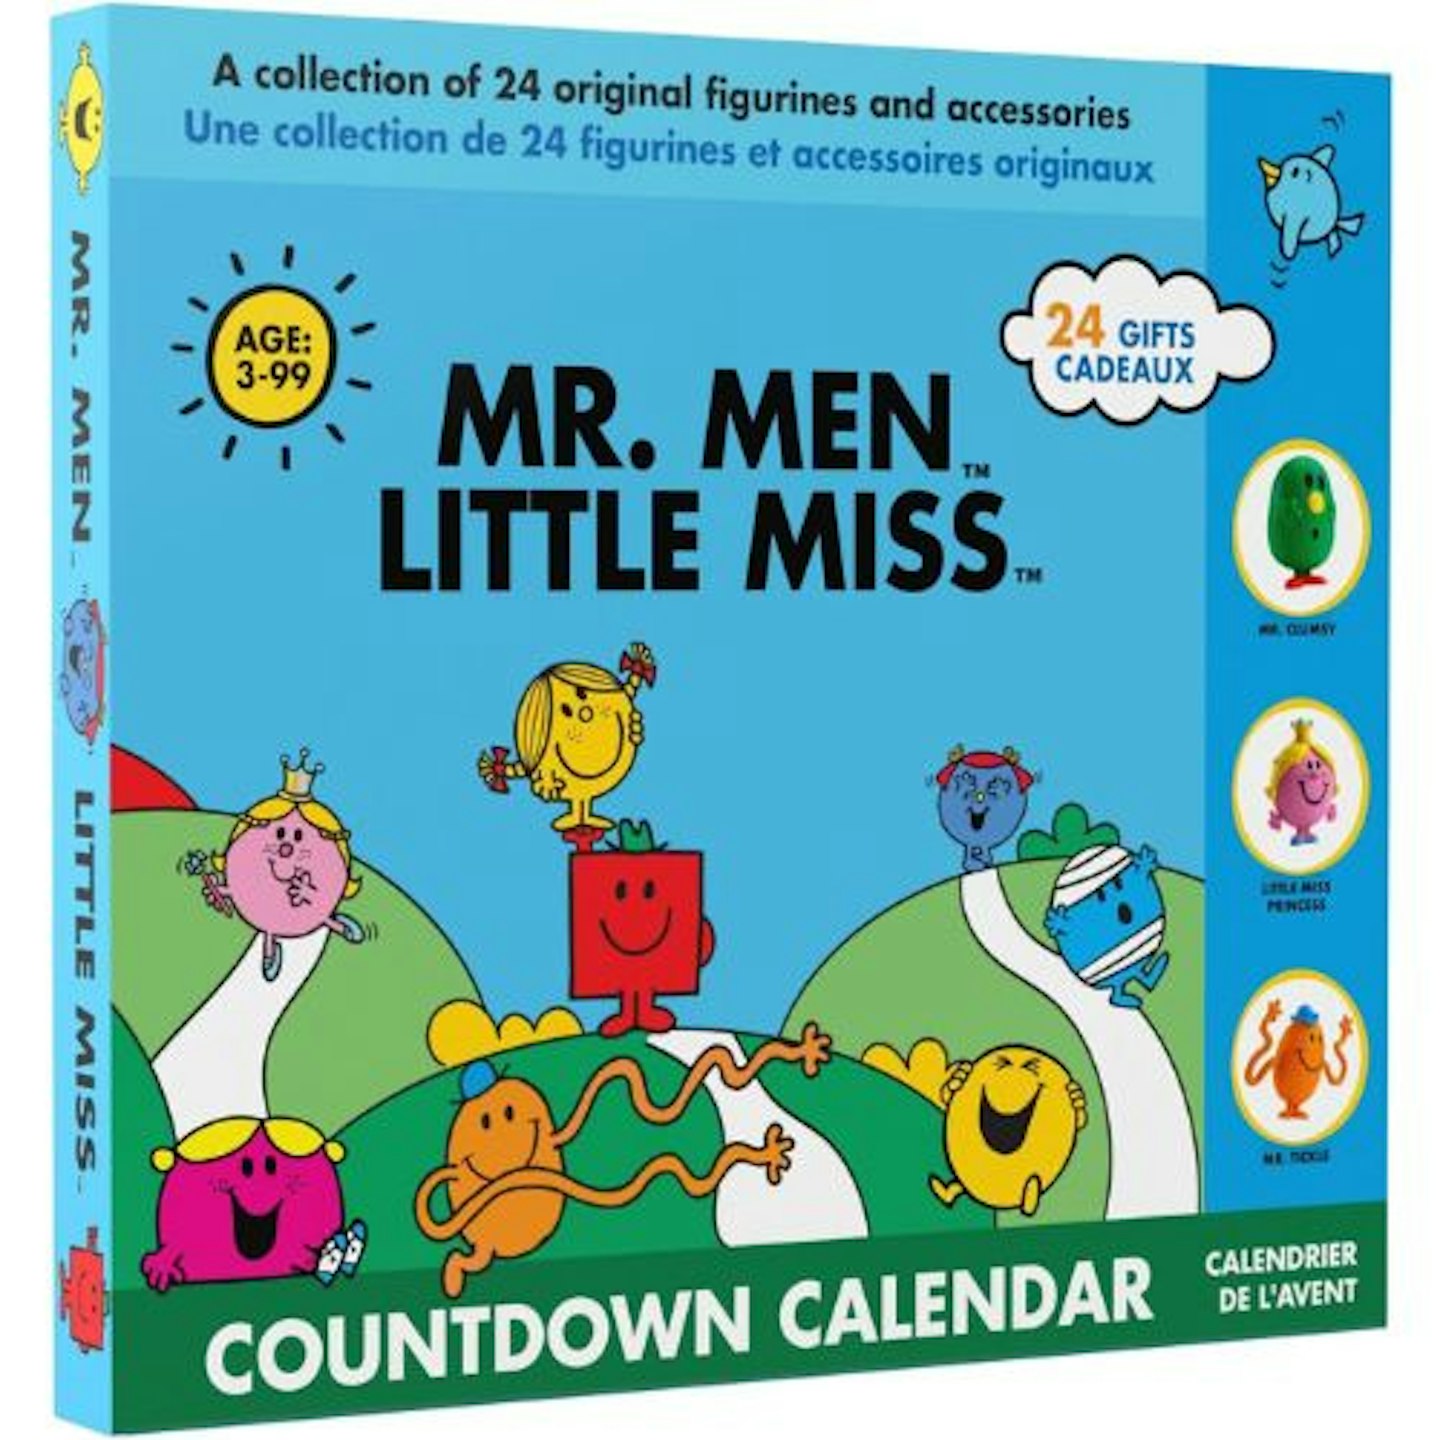 Best Advent calendars for toddlers The Original Mr. Men & Little Miss Advent Calendar